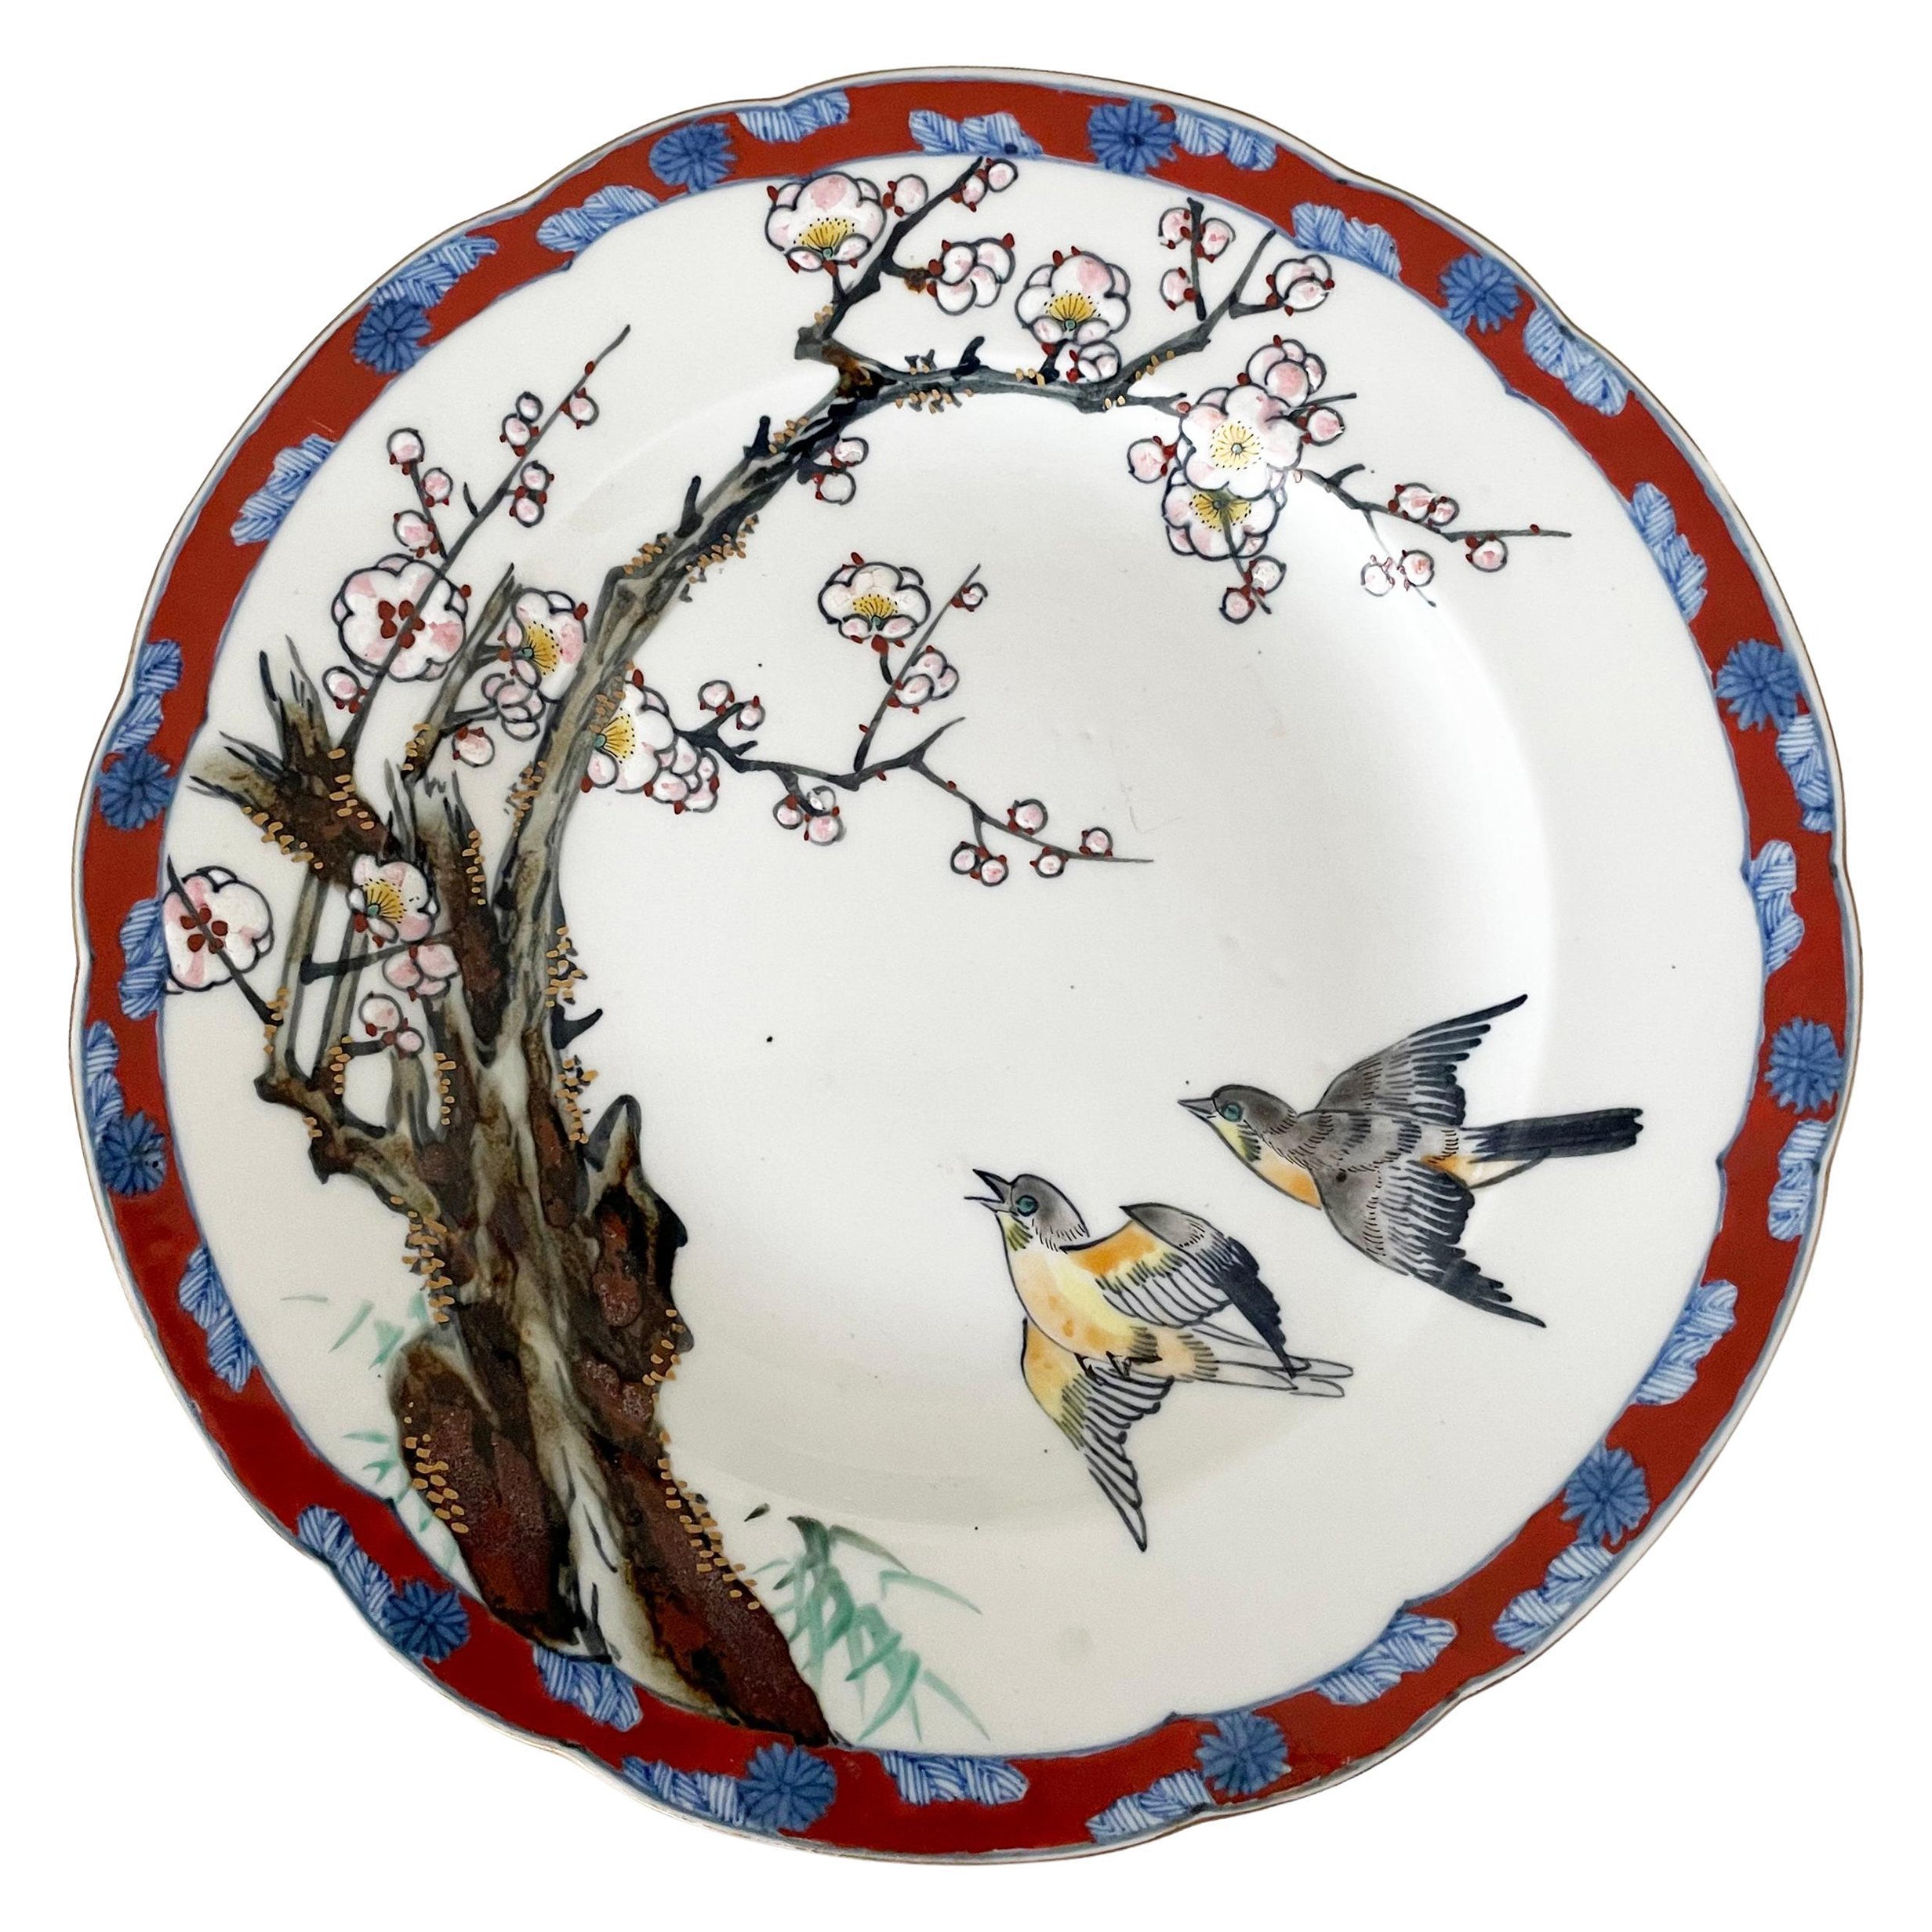  Japanese Prunus And Swift Decorated Plate, Seiji Kaisha Company, Late 19th C